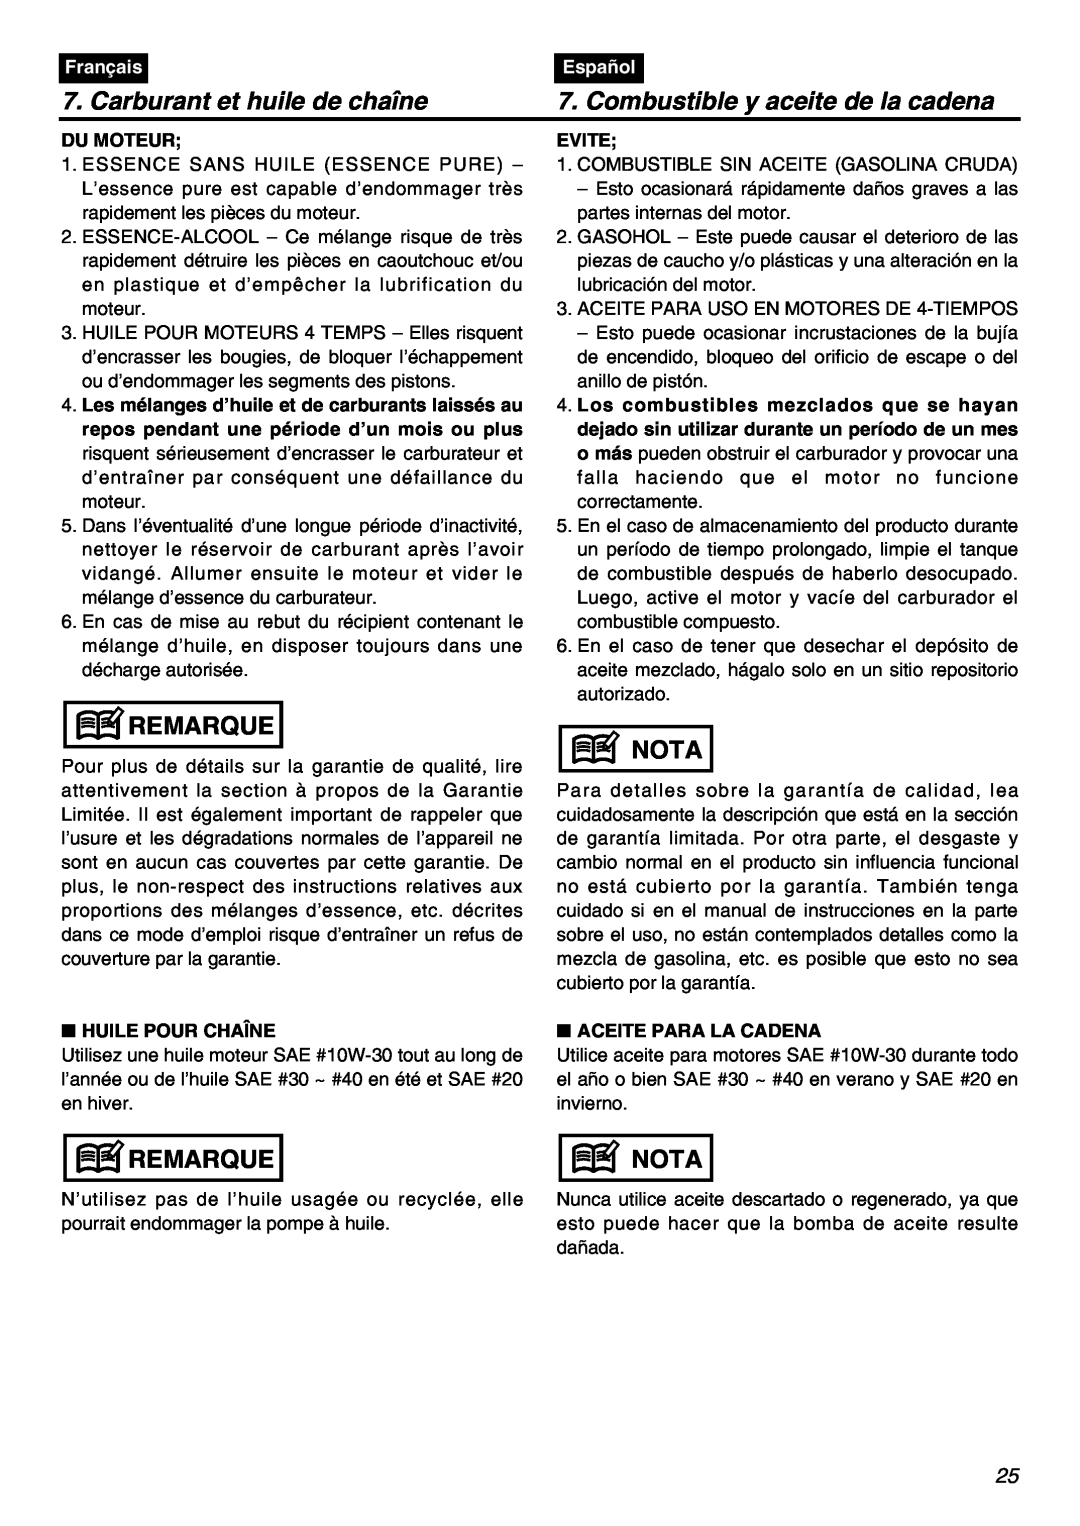 Zenoah G5000AVS manual Carburant et huile de chaîne, Combustible y aceite de la cadena, Remarque, Nota, Français, Español 